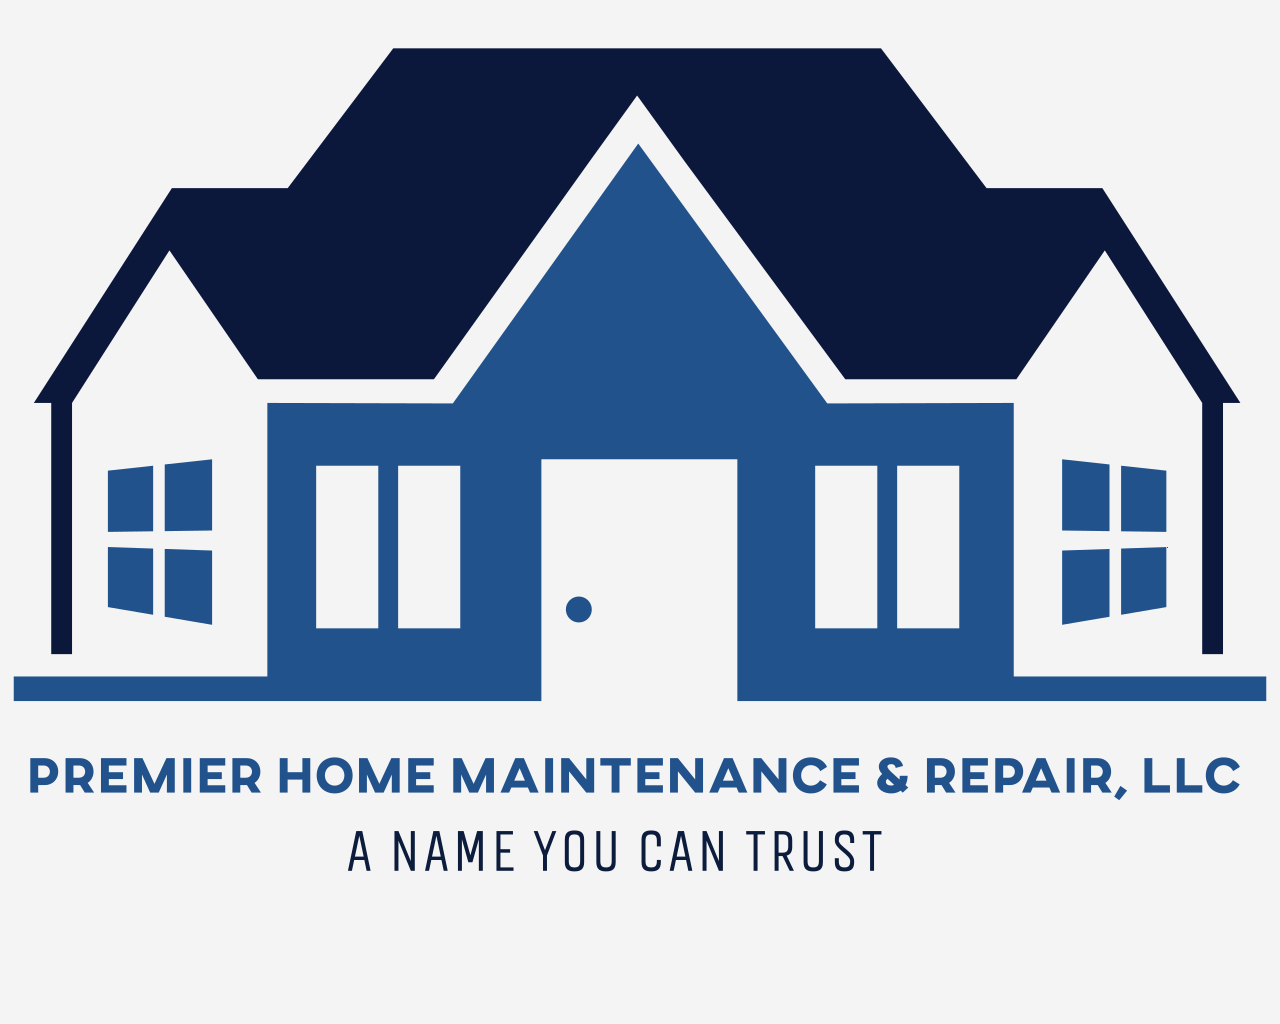 PREMIER HOME MAINTENANCE & REPAIR, LLC's logo